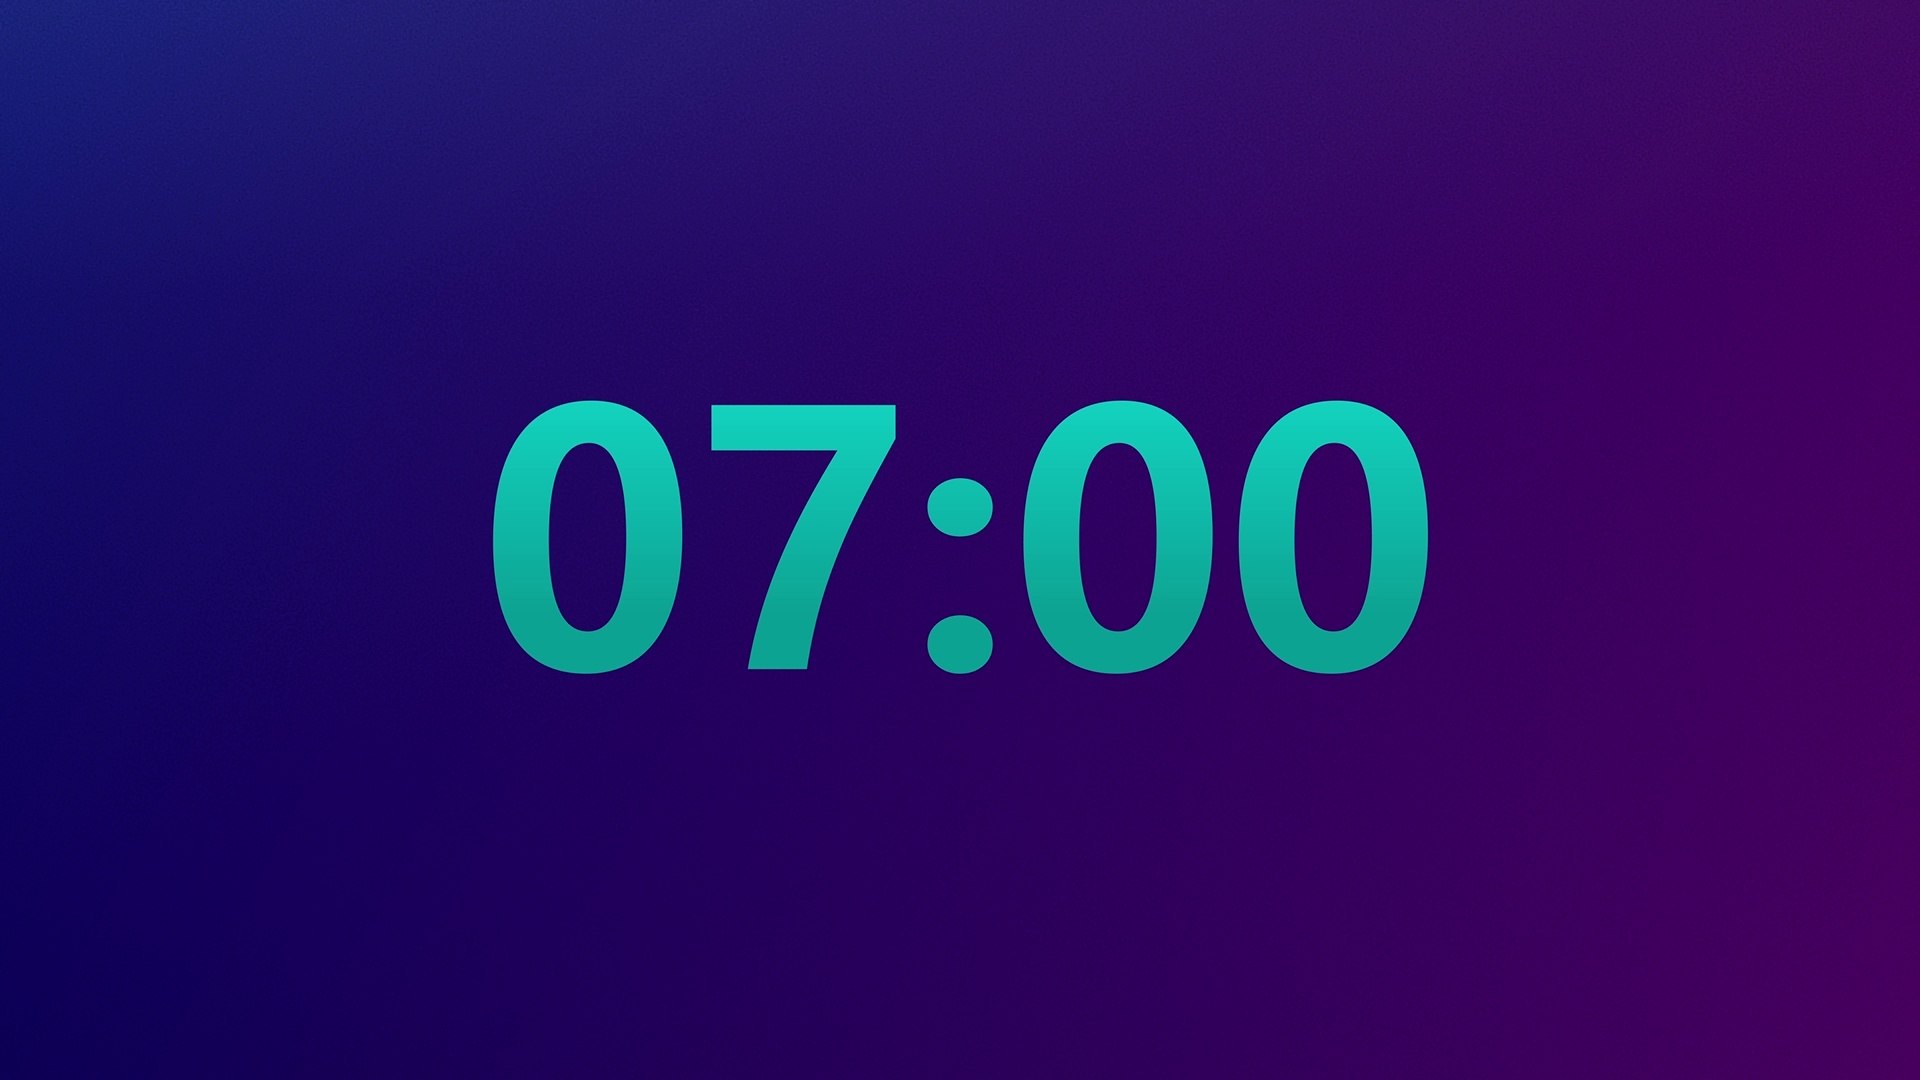 7 Minute Countdown Sound Alarm ⏱⏱⏱⏱⏱⏱⏱ - video Dailymotion